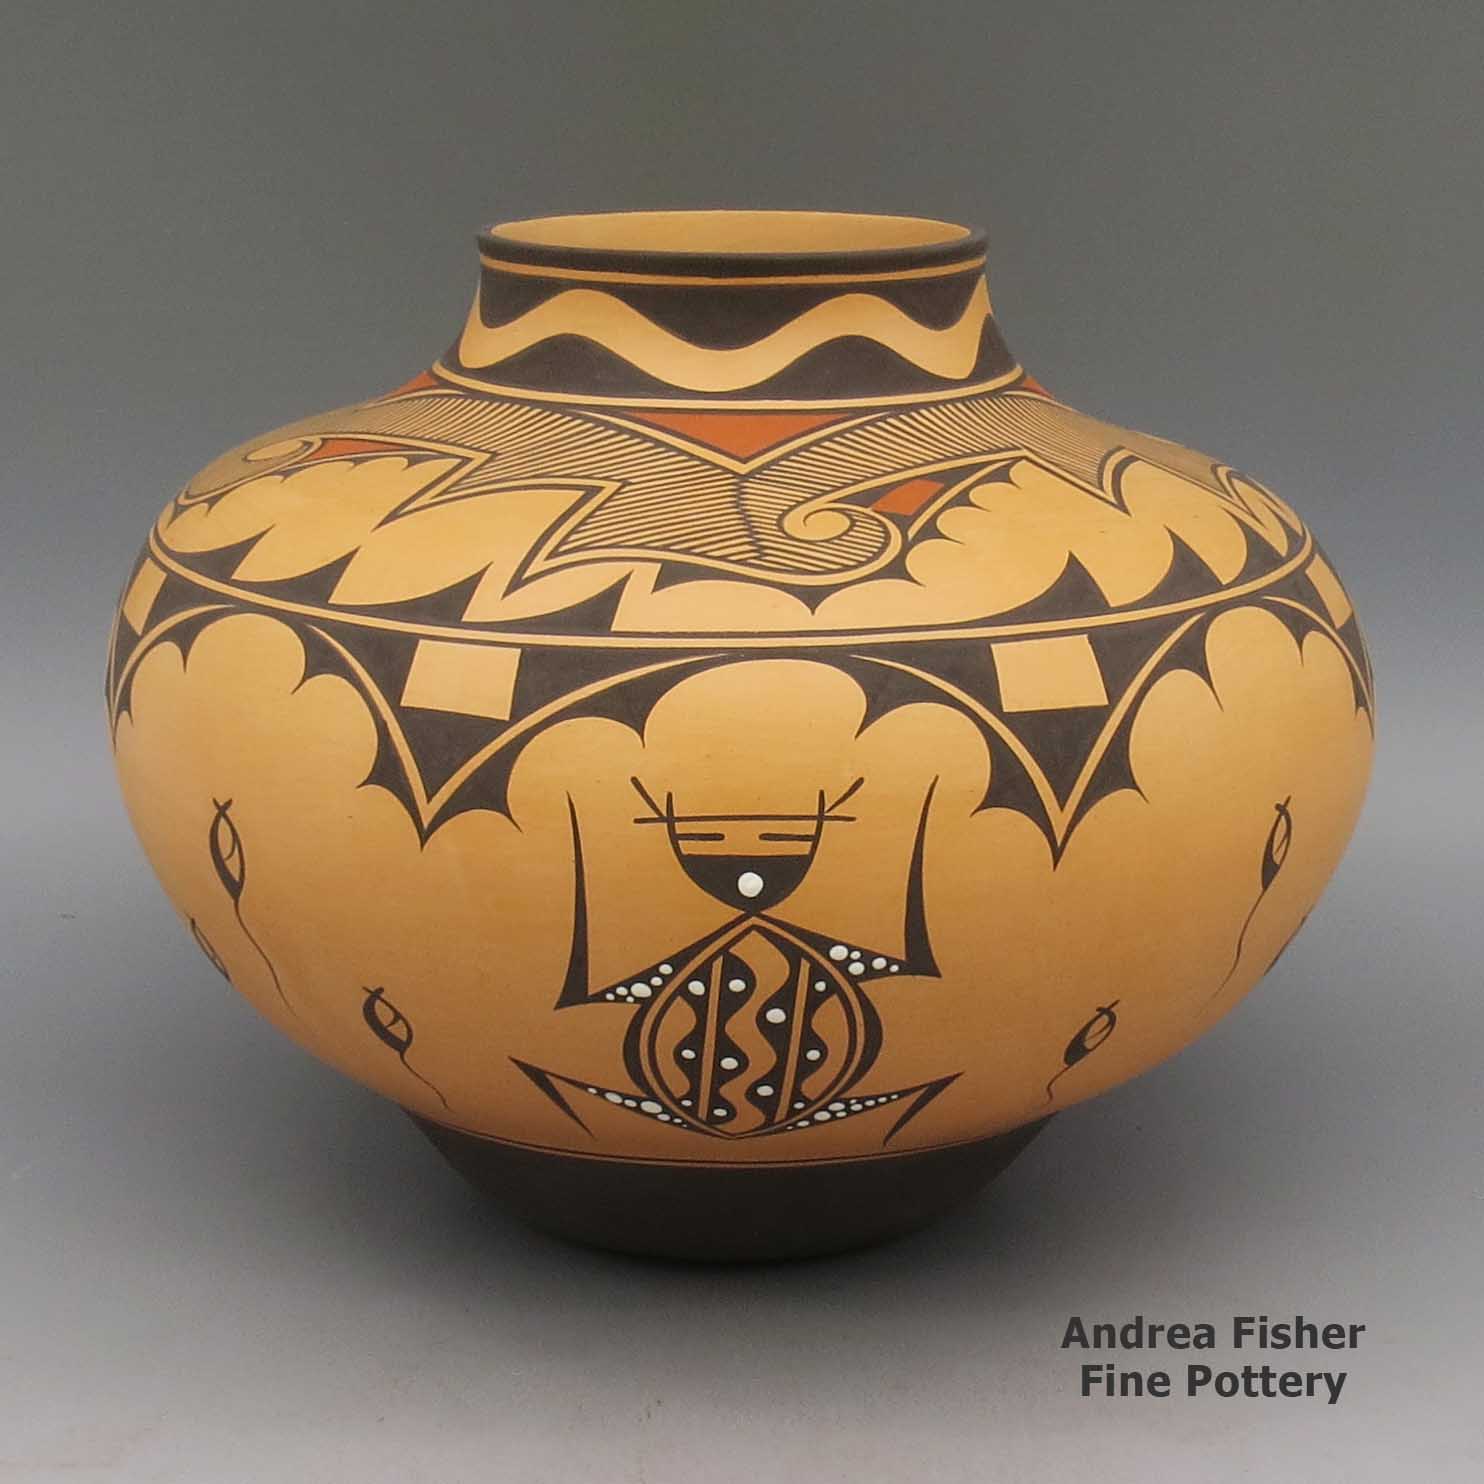 Polychrome jar with frog, tadpole, and geometric design made by Anderson Jamie Peynetsa of Zuni